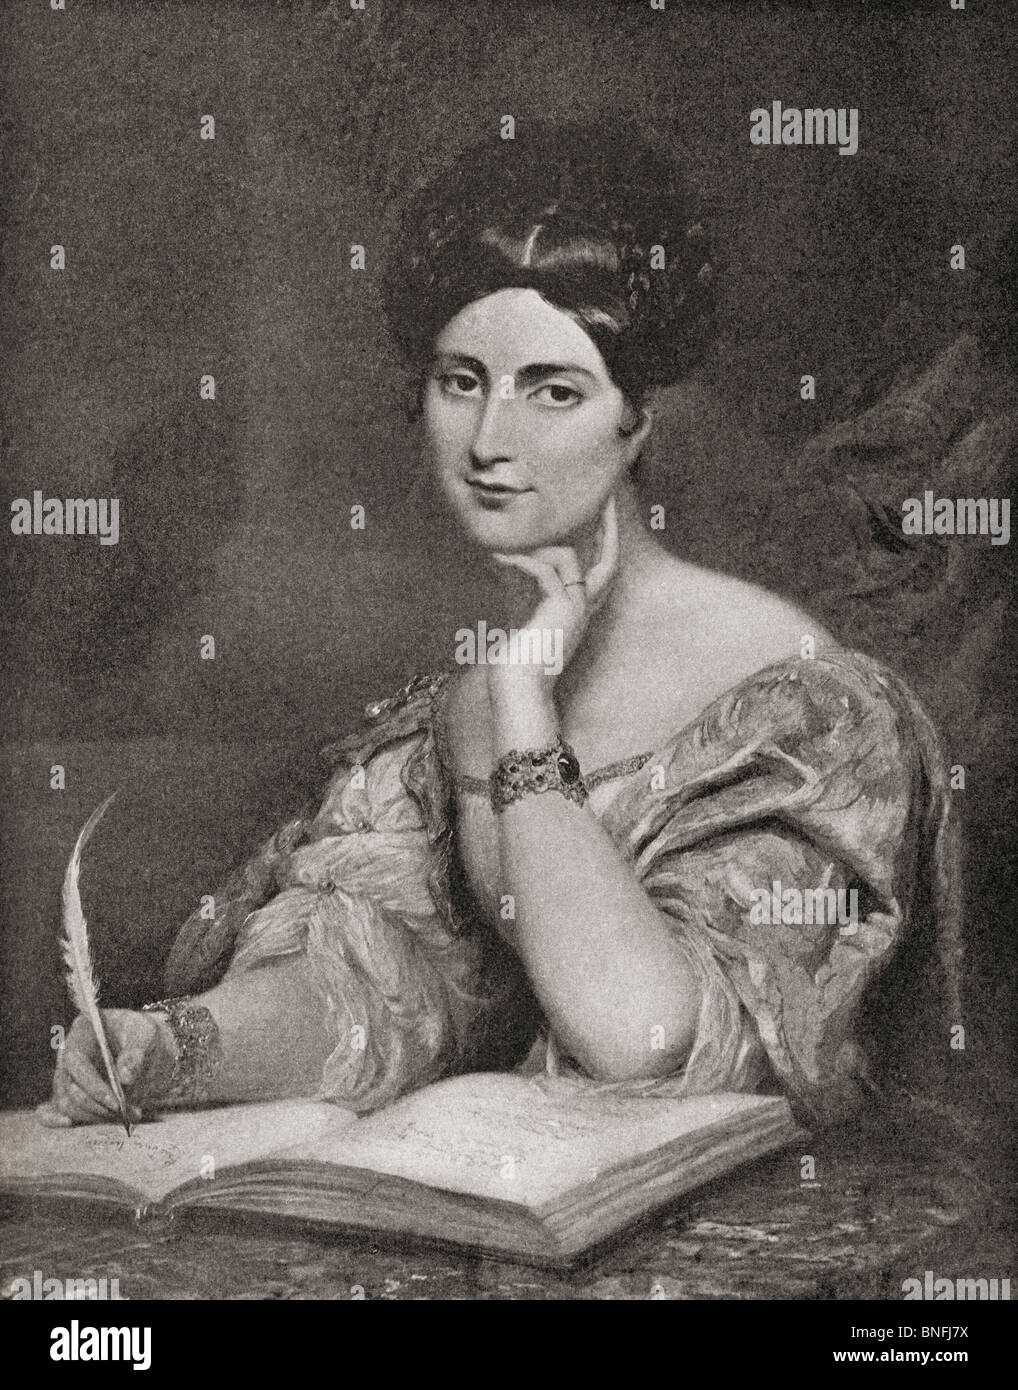 Caroline Elizabeth Sarah Norton, née Sheridan, The Honourable Mrs Caroline Norton, 1808 - 1877. English author and reformer. Stock Photo